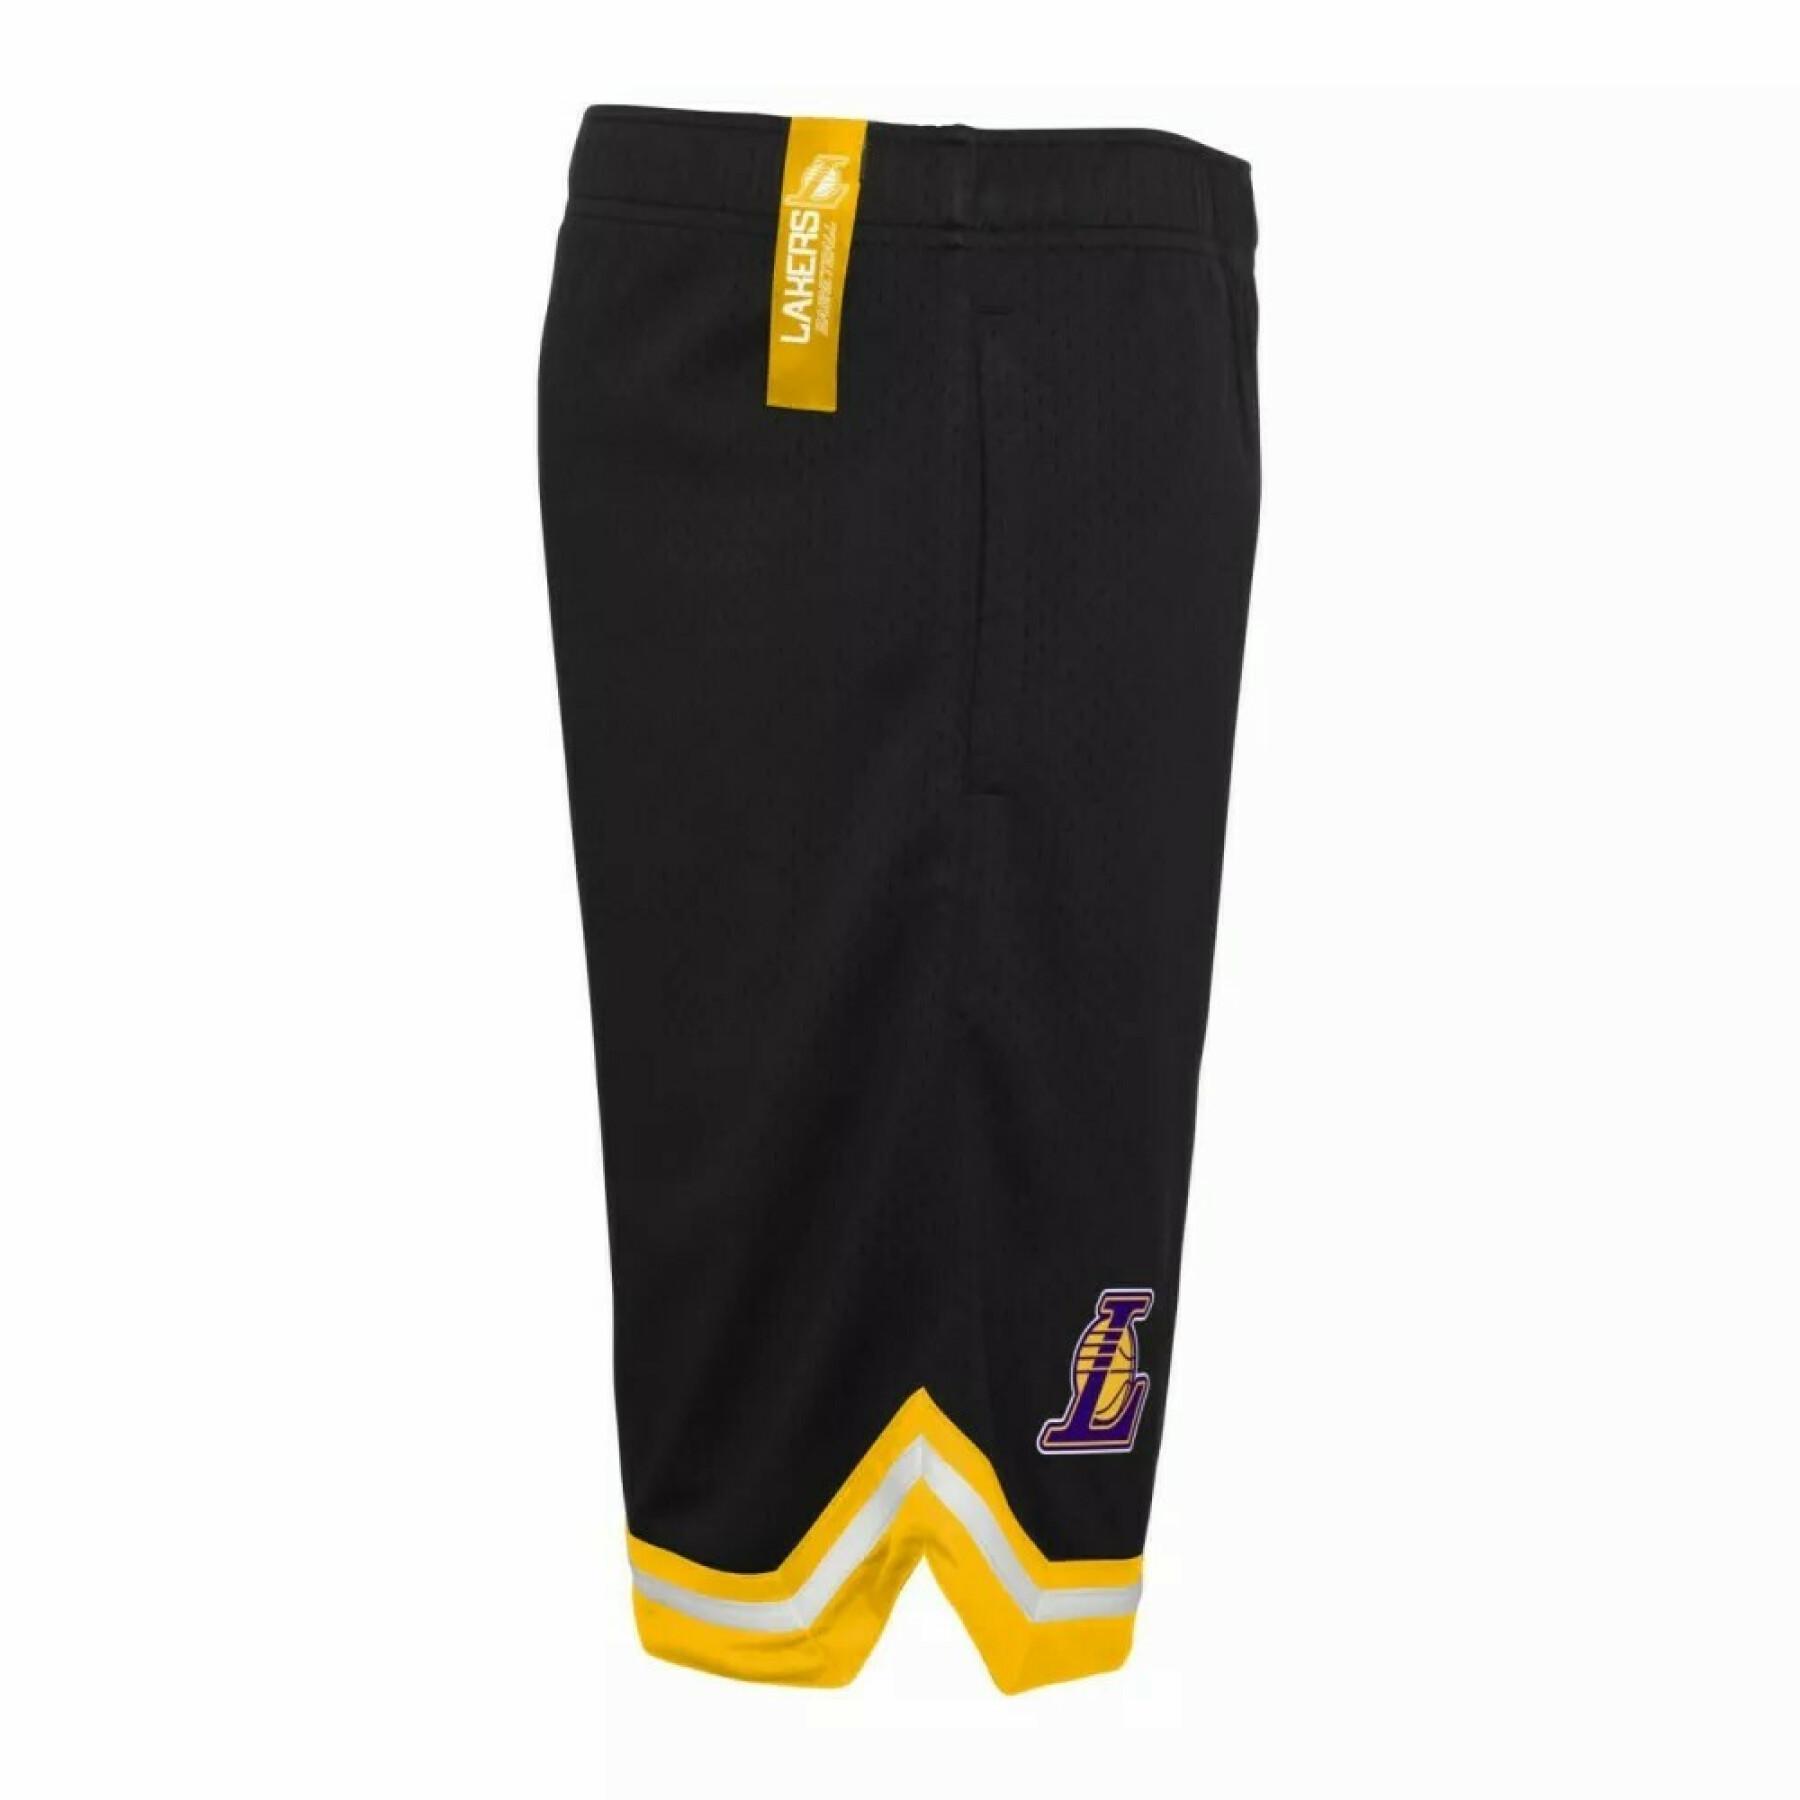 Shorts für Kinder Los Angeles Lakers Baller Mesh